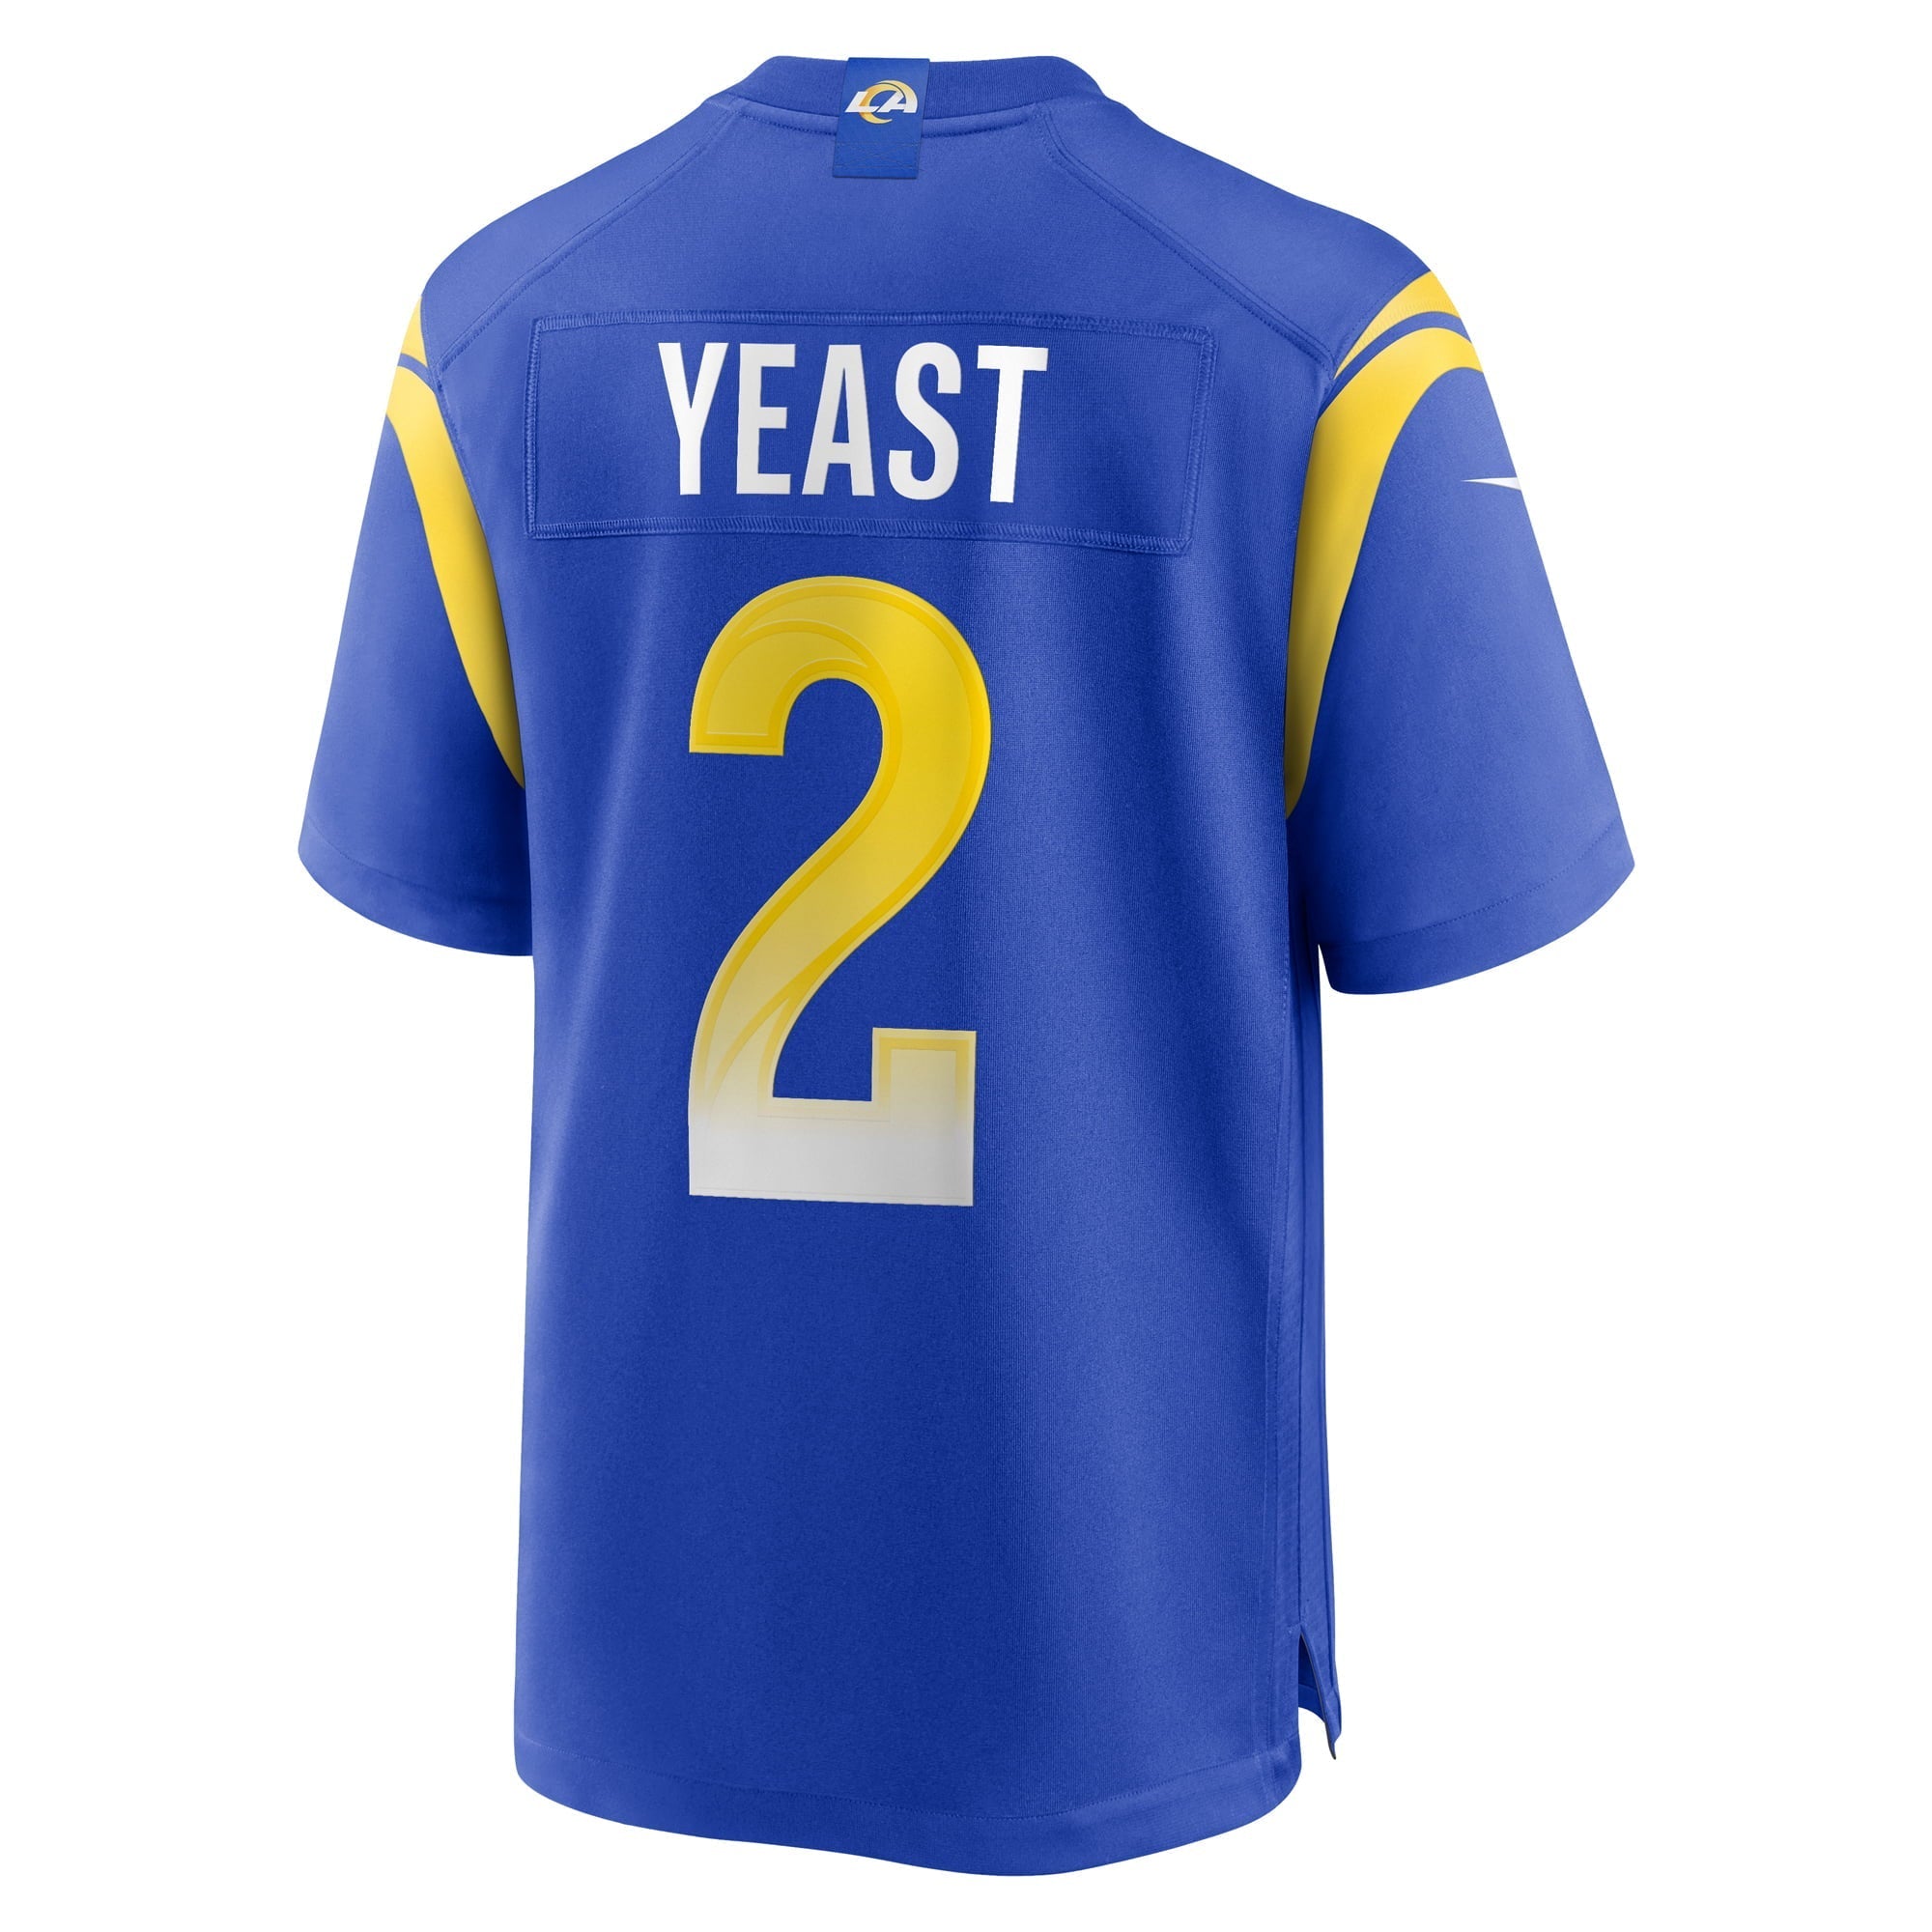 Yeast Russ replica jersey